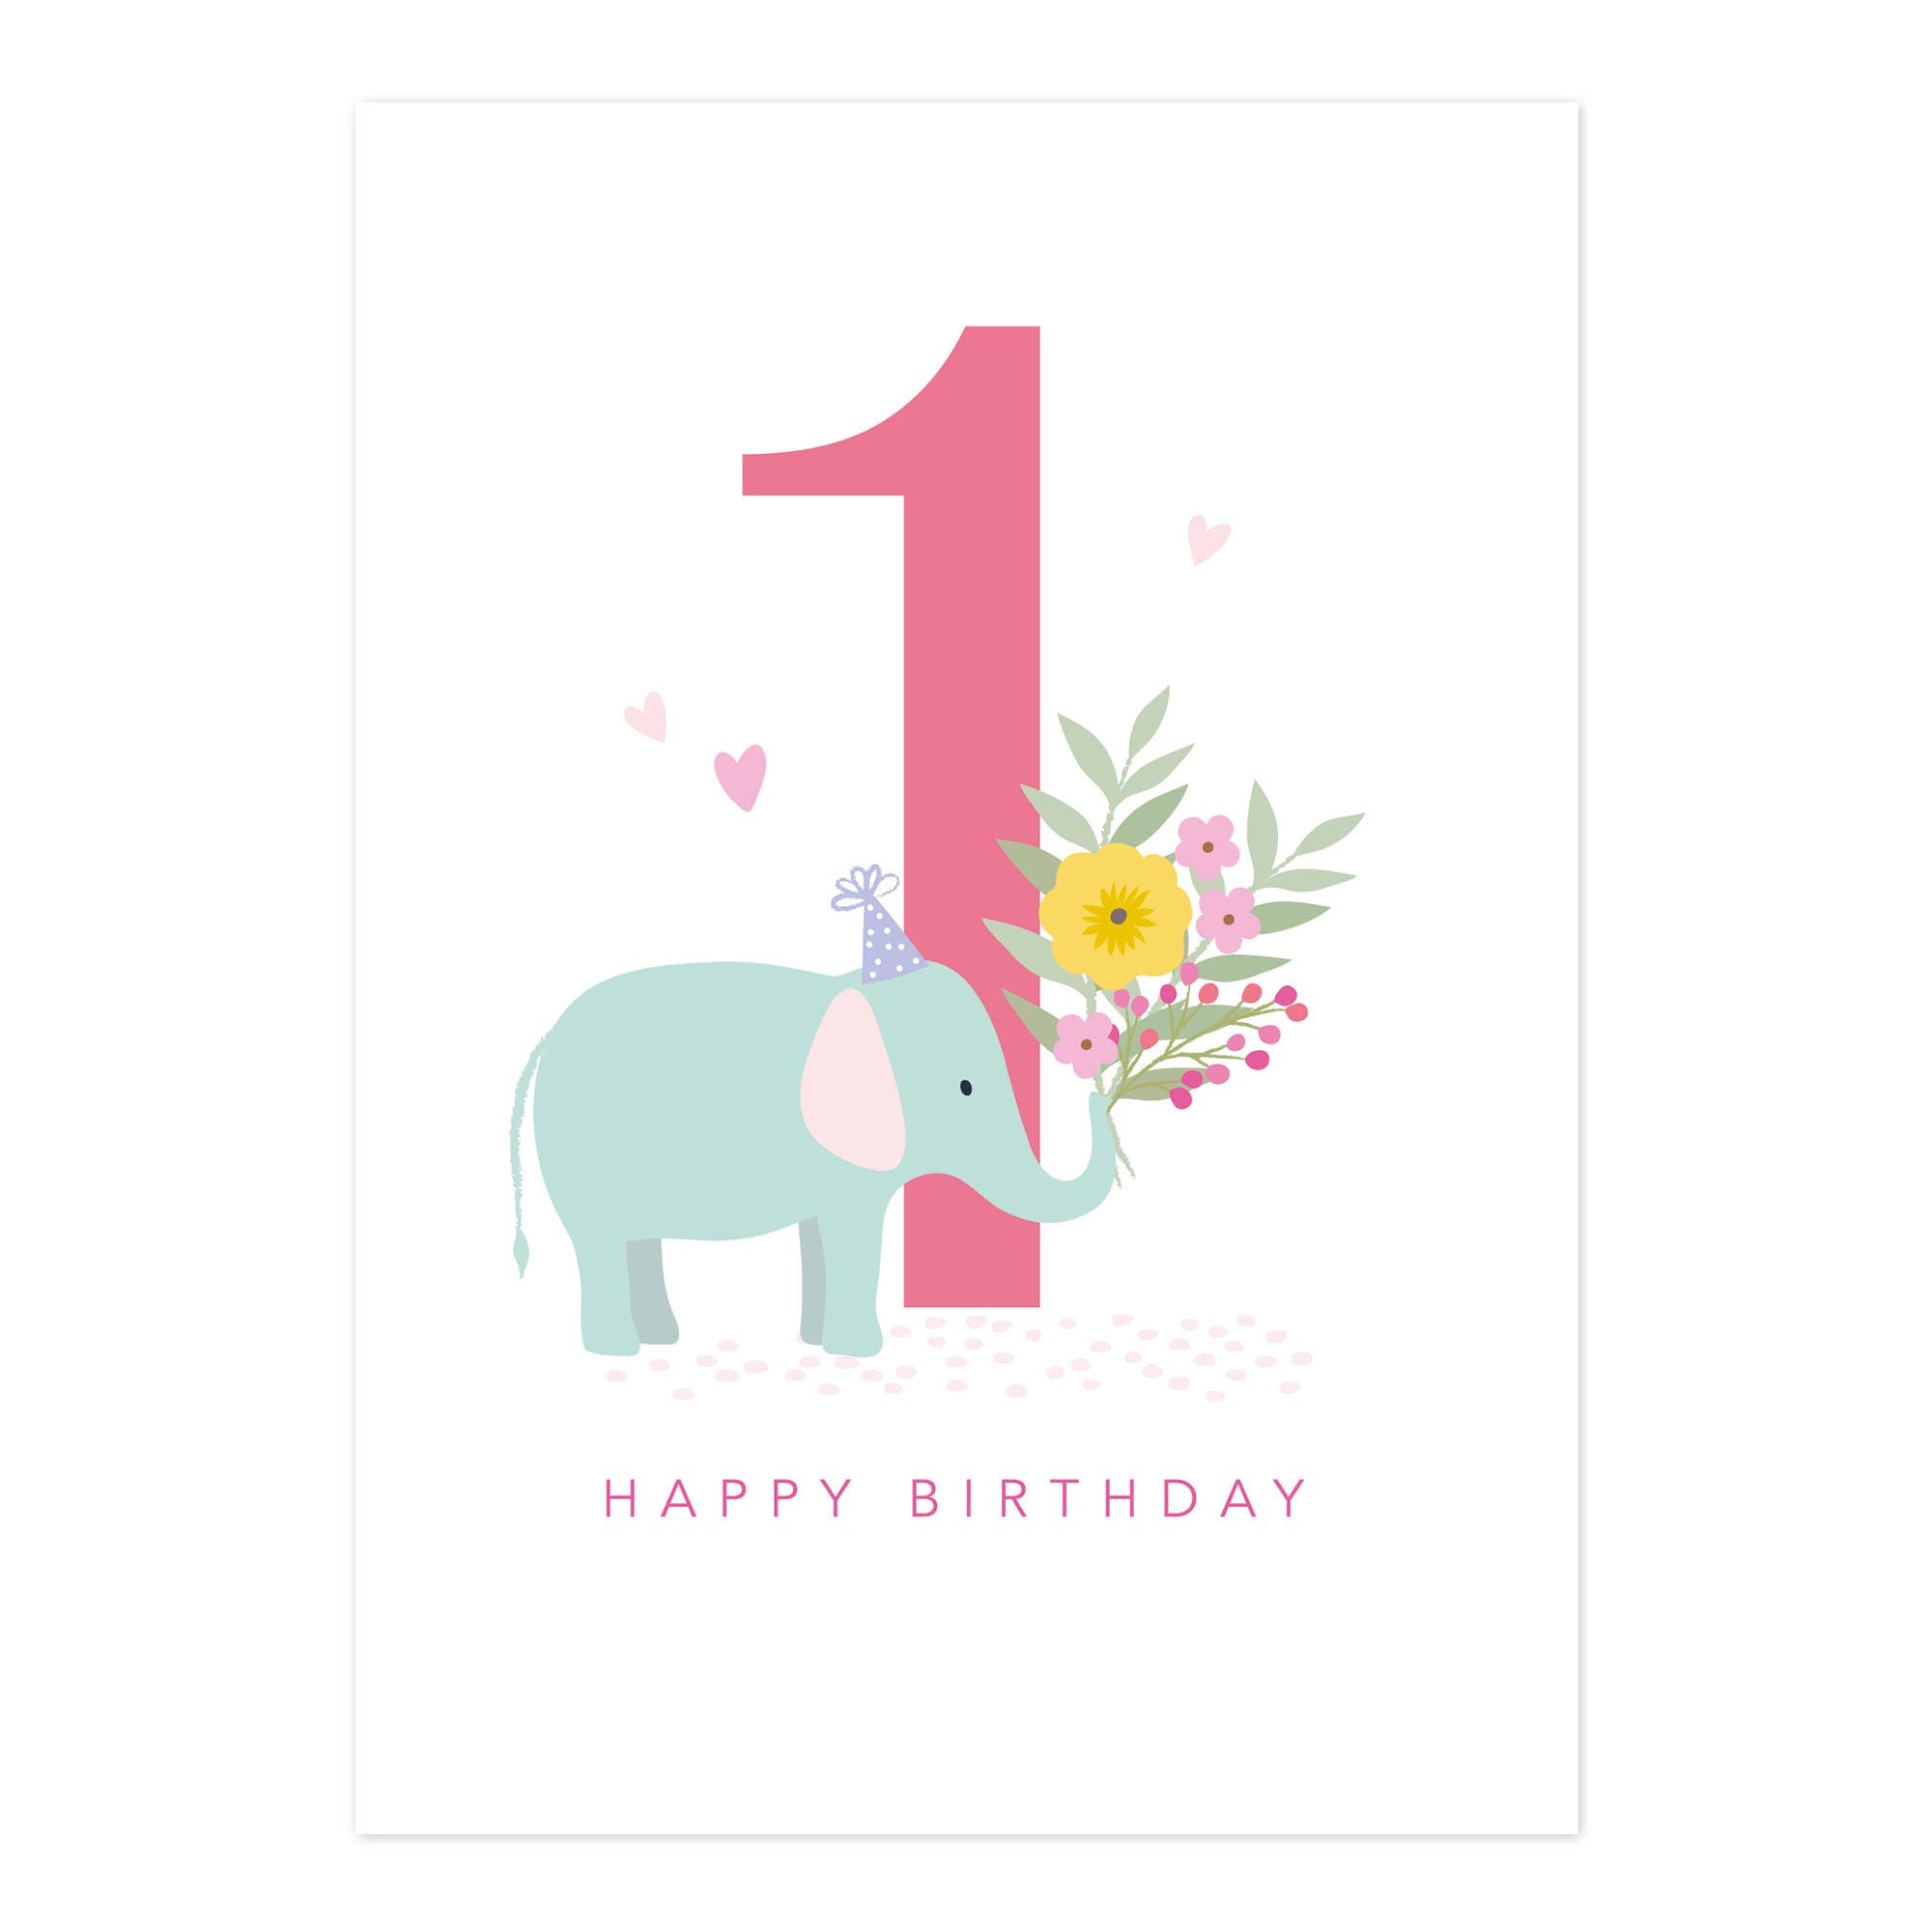 Happy Birthday Card - Age 1 Elephant